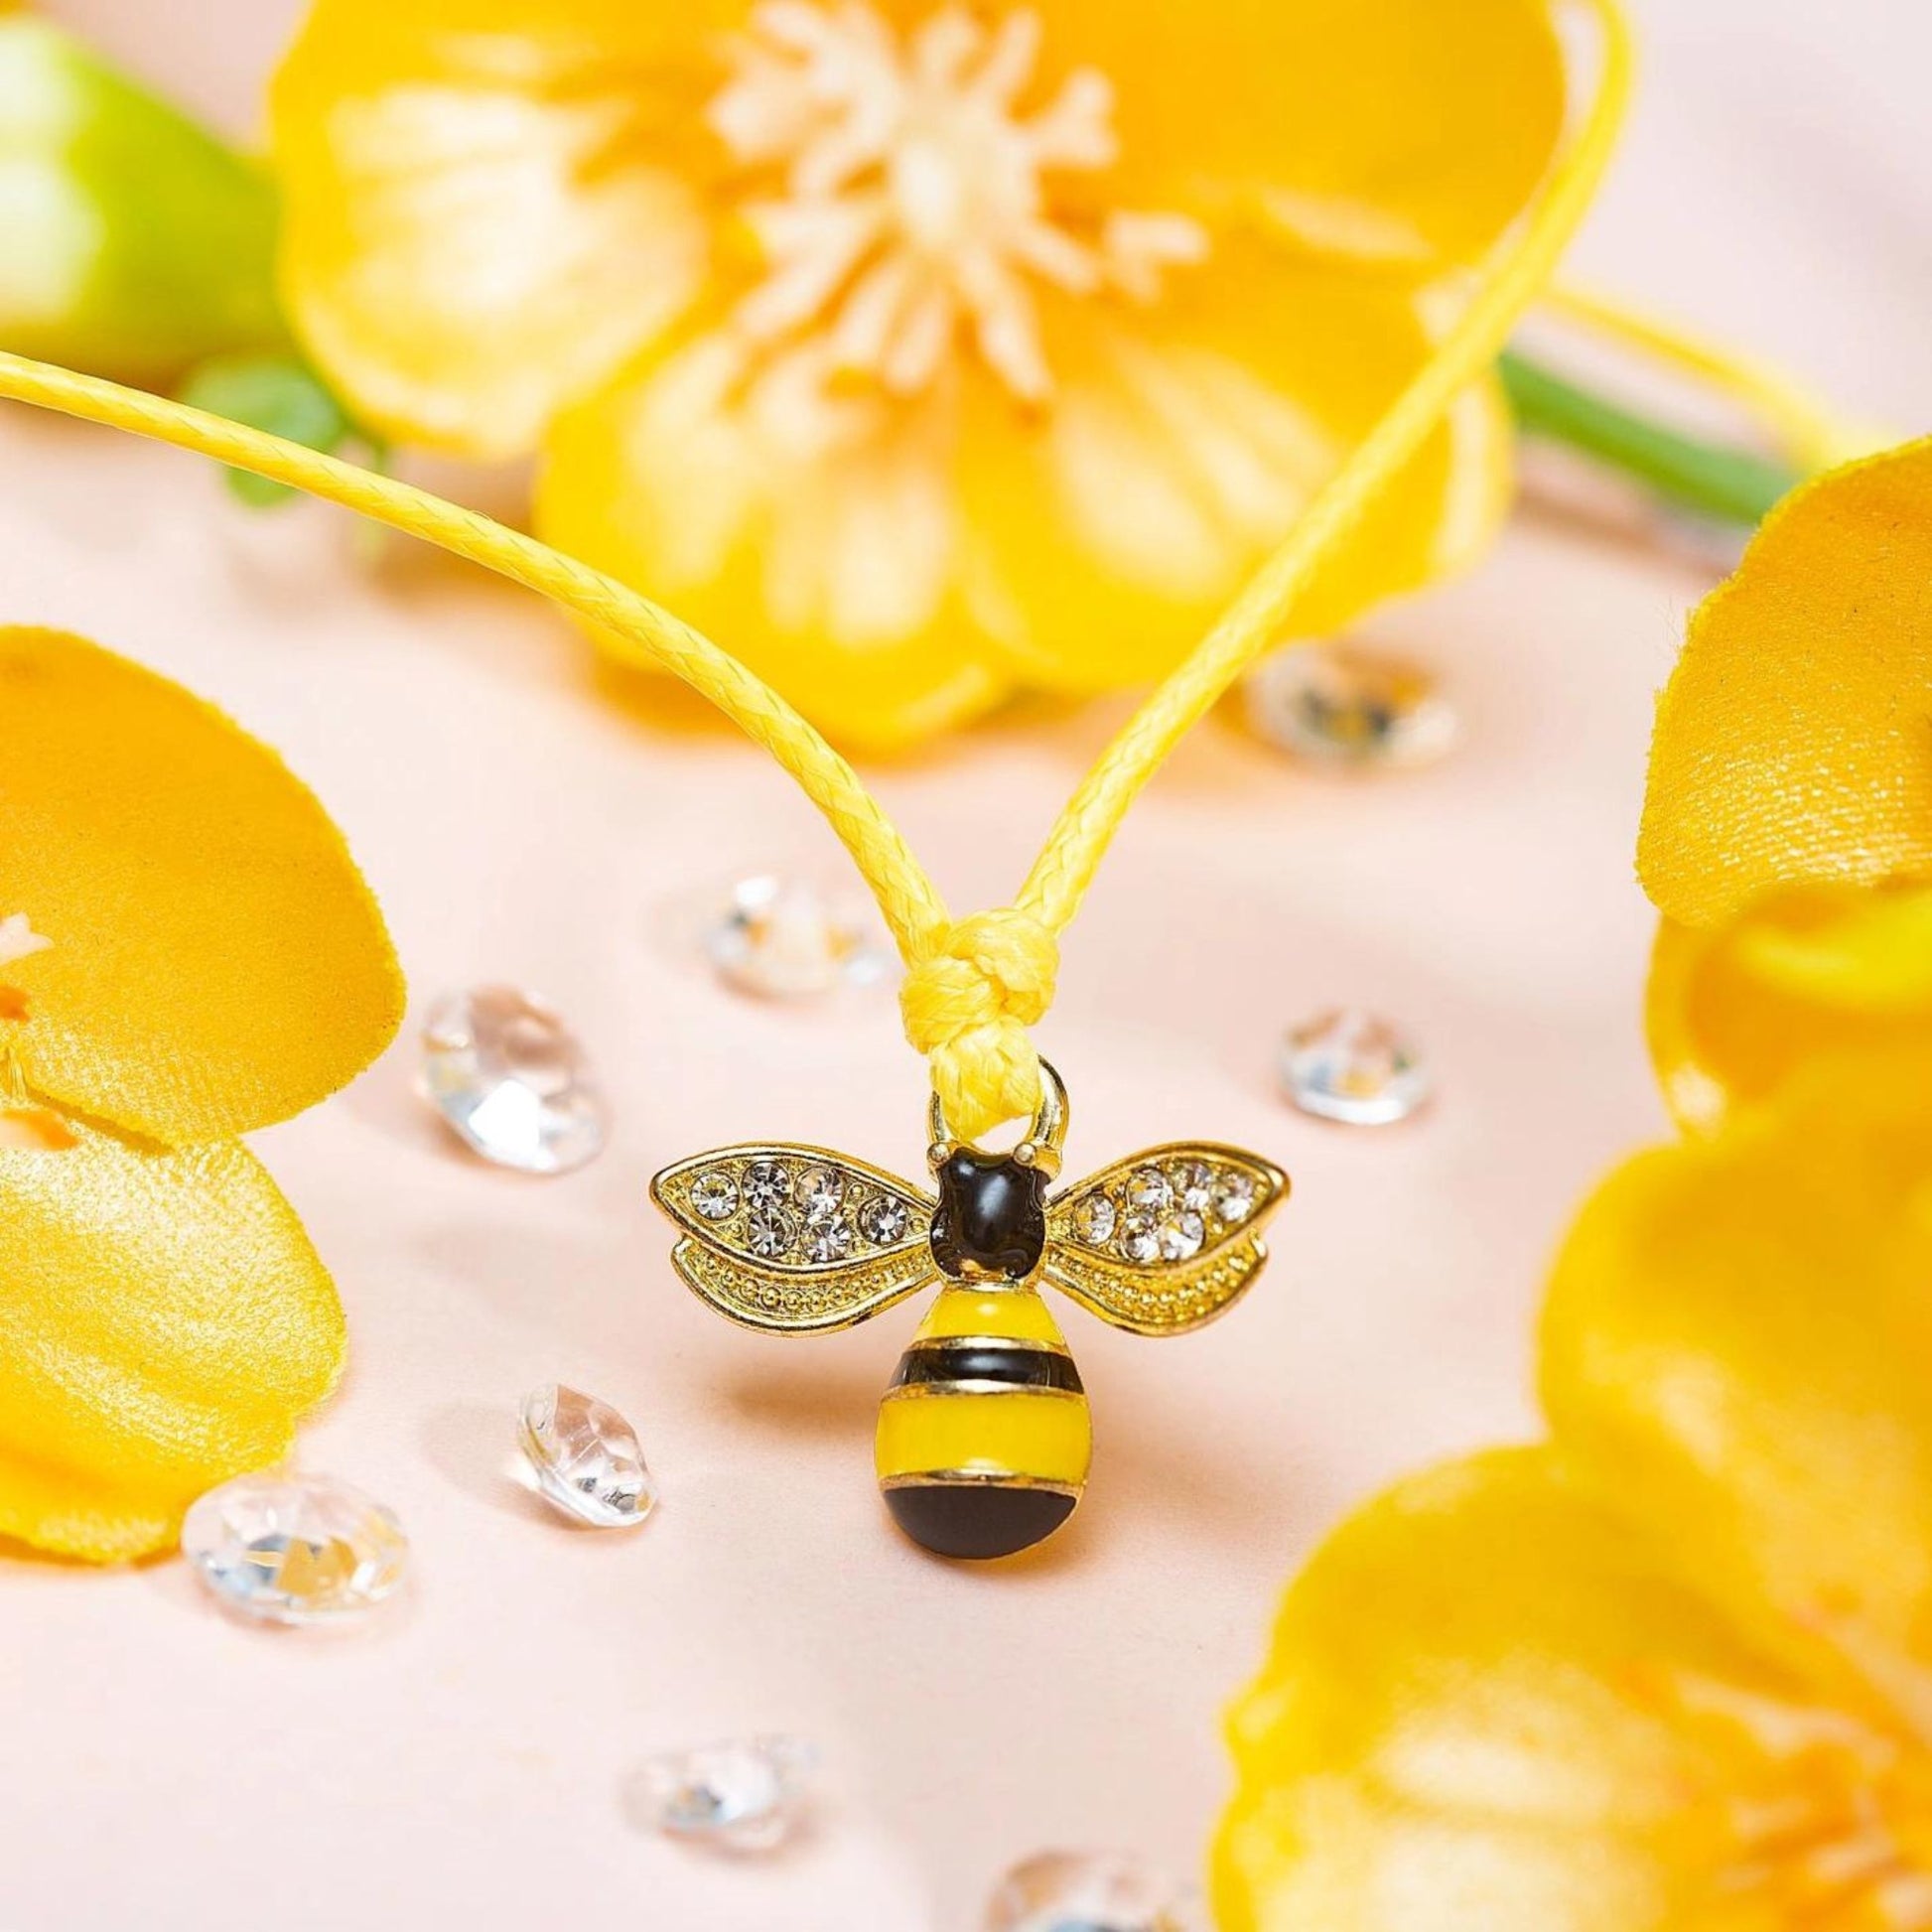 The Little Bee - Seeded Card & Wish Bracelet - The Little Jewellery Company